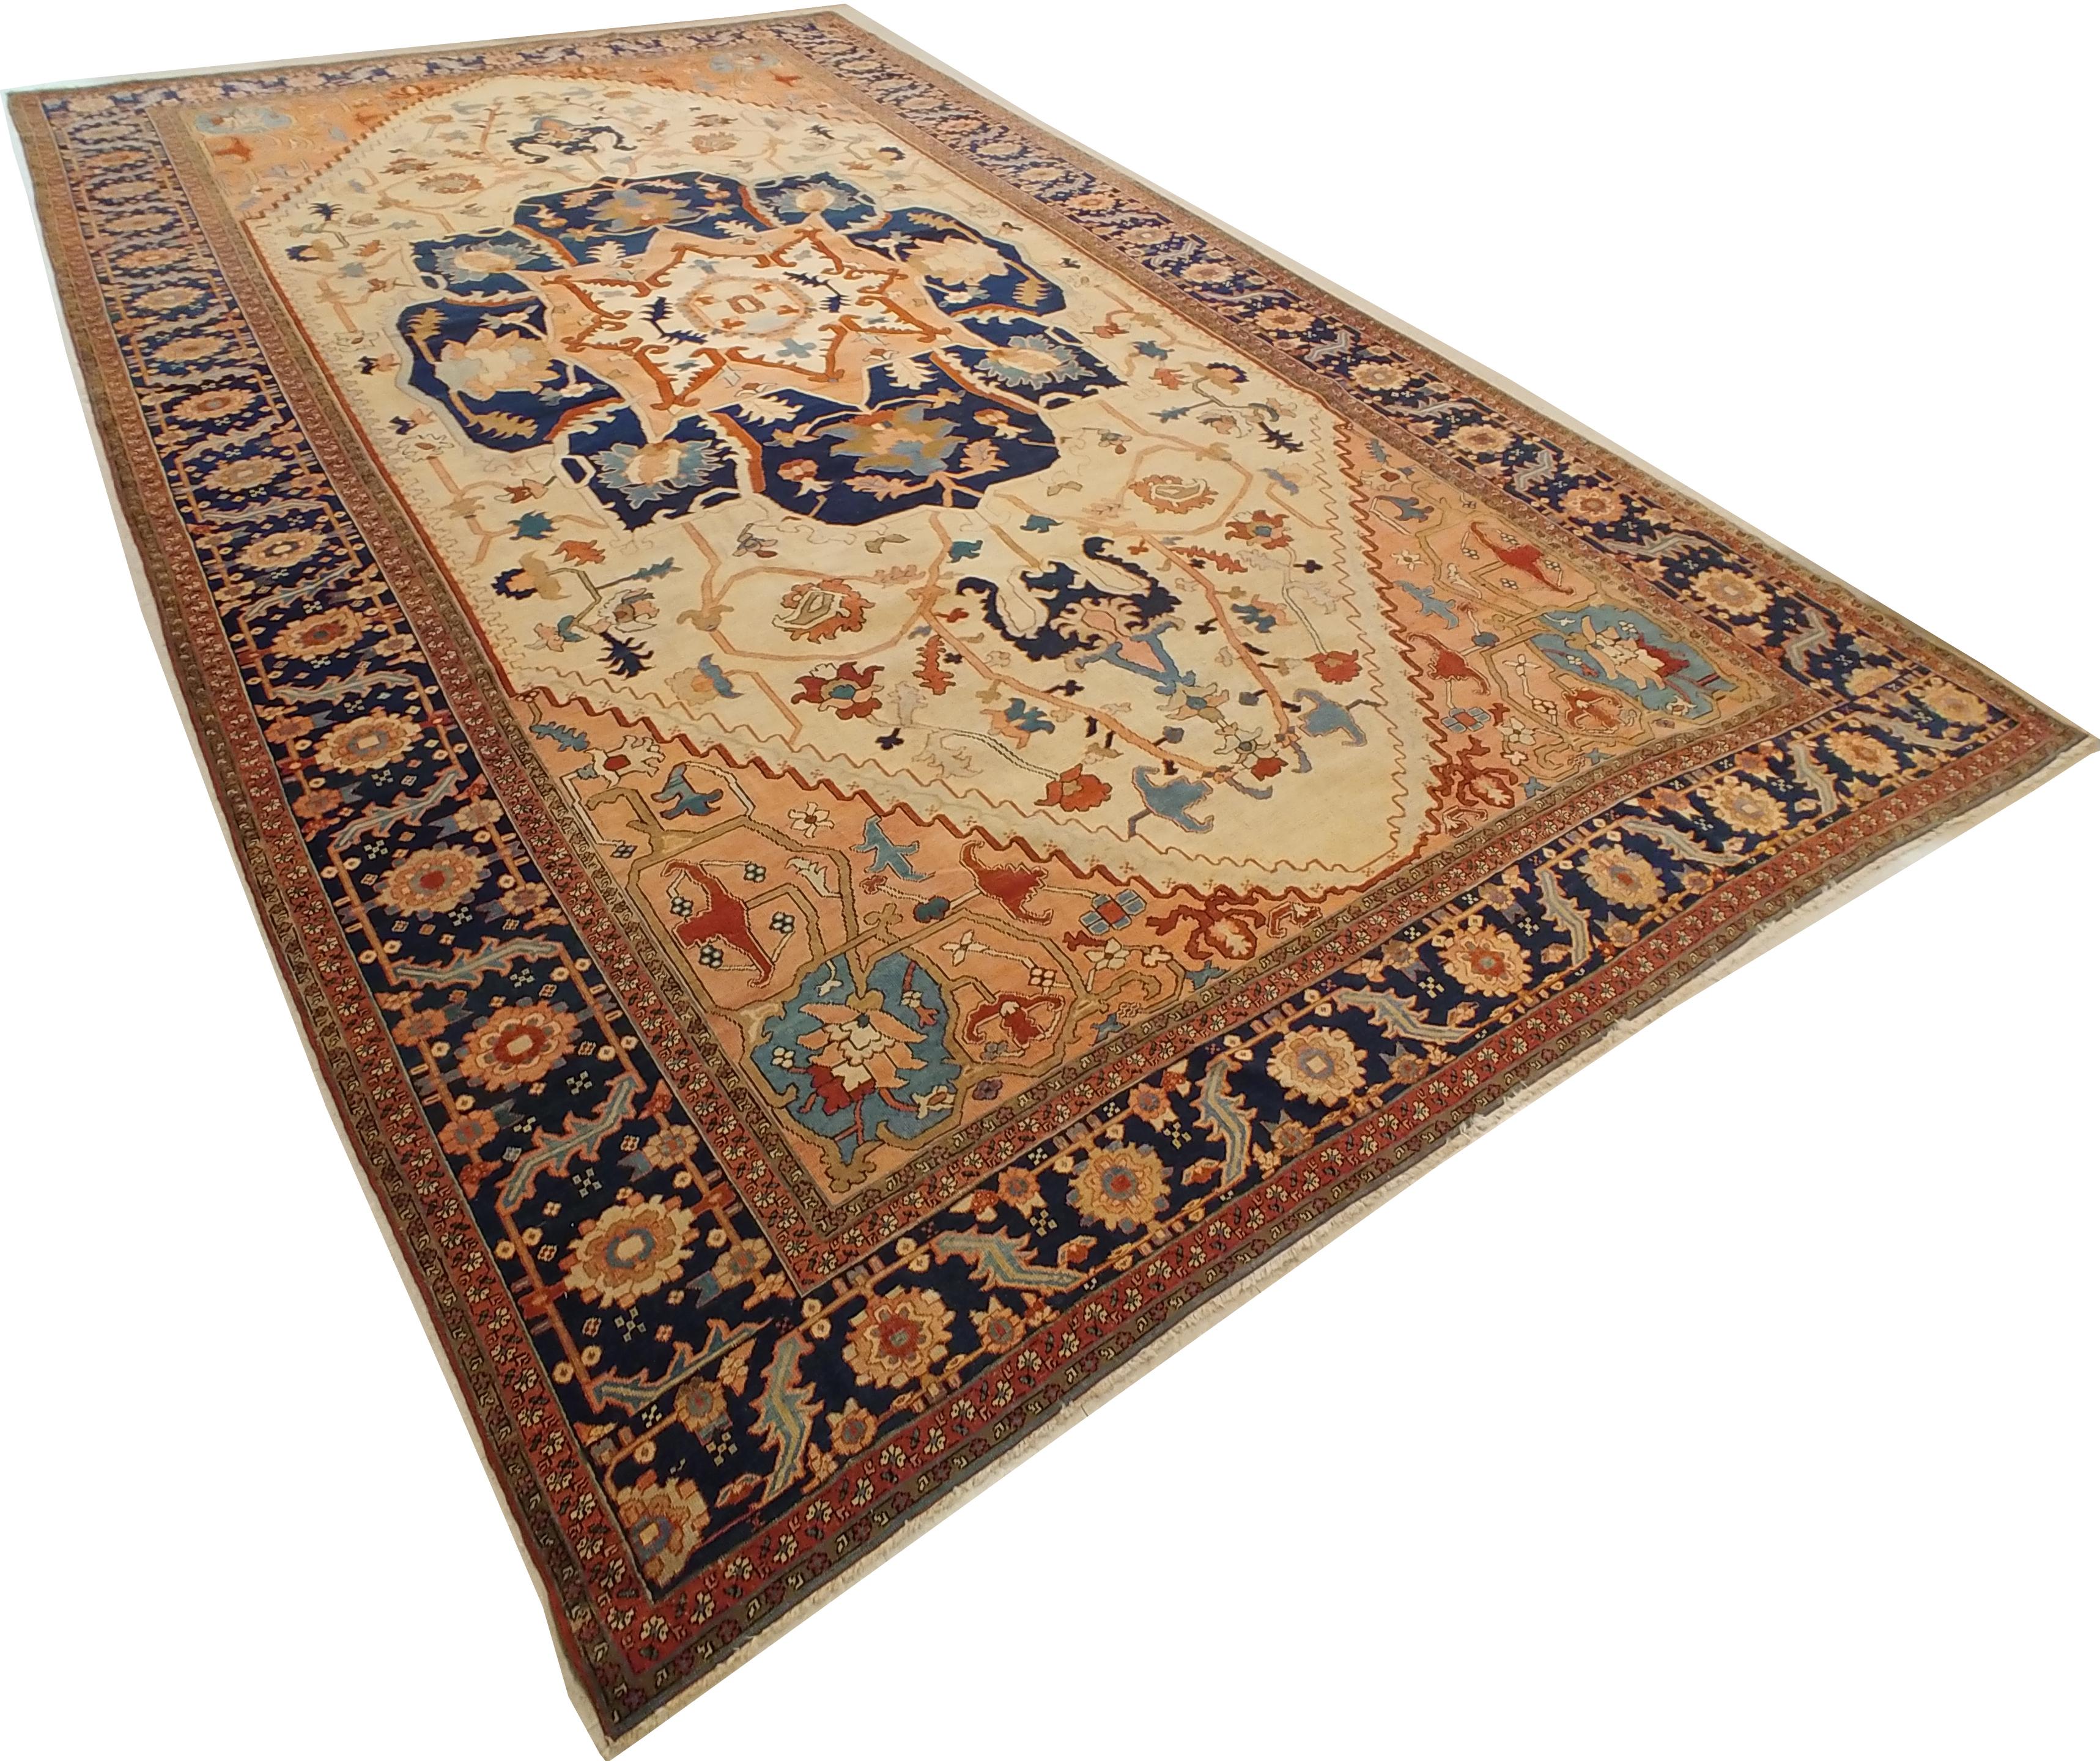 Antique Persian Serapi Carpet, Handmade Wool Oriental Rug, Ivory and Light Blue For Sale 5